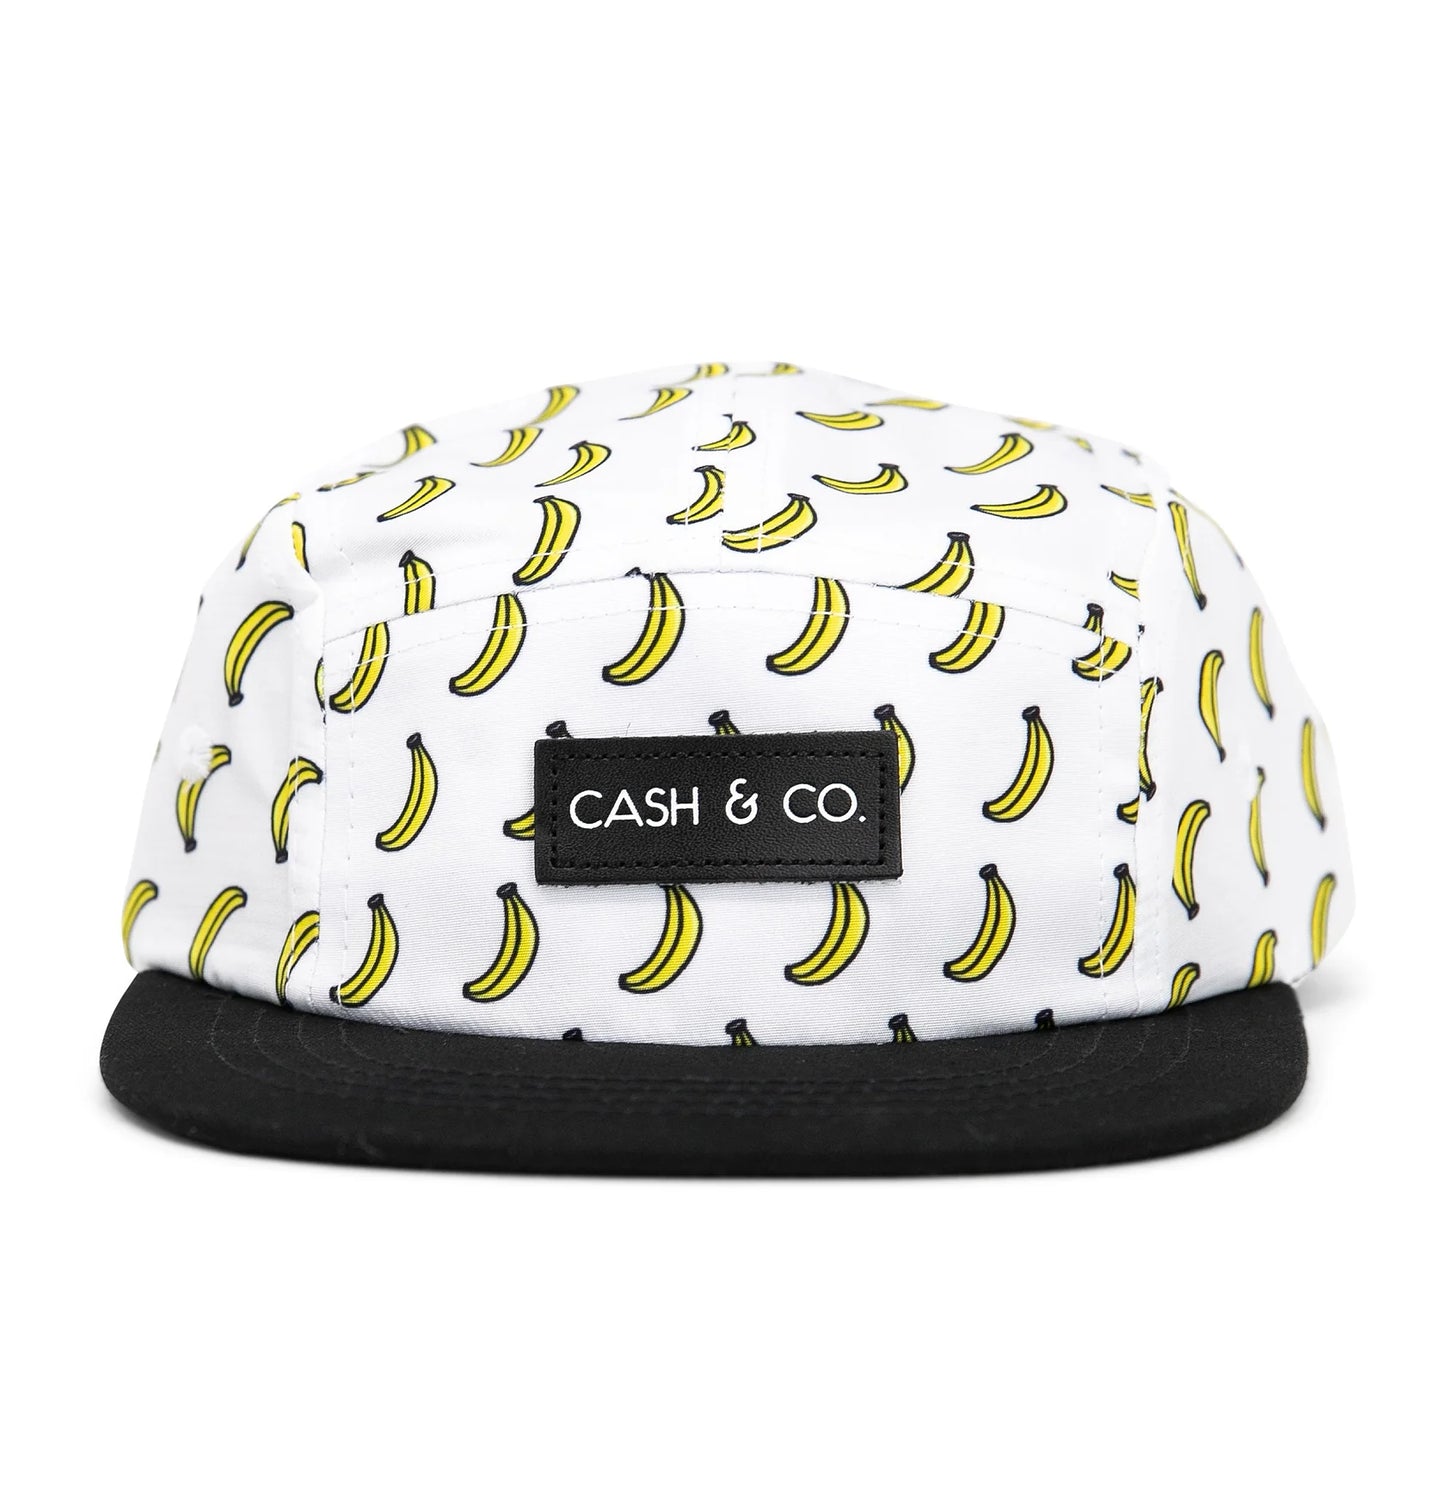 Banana - Cash & co